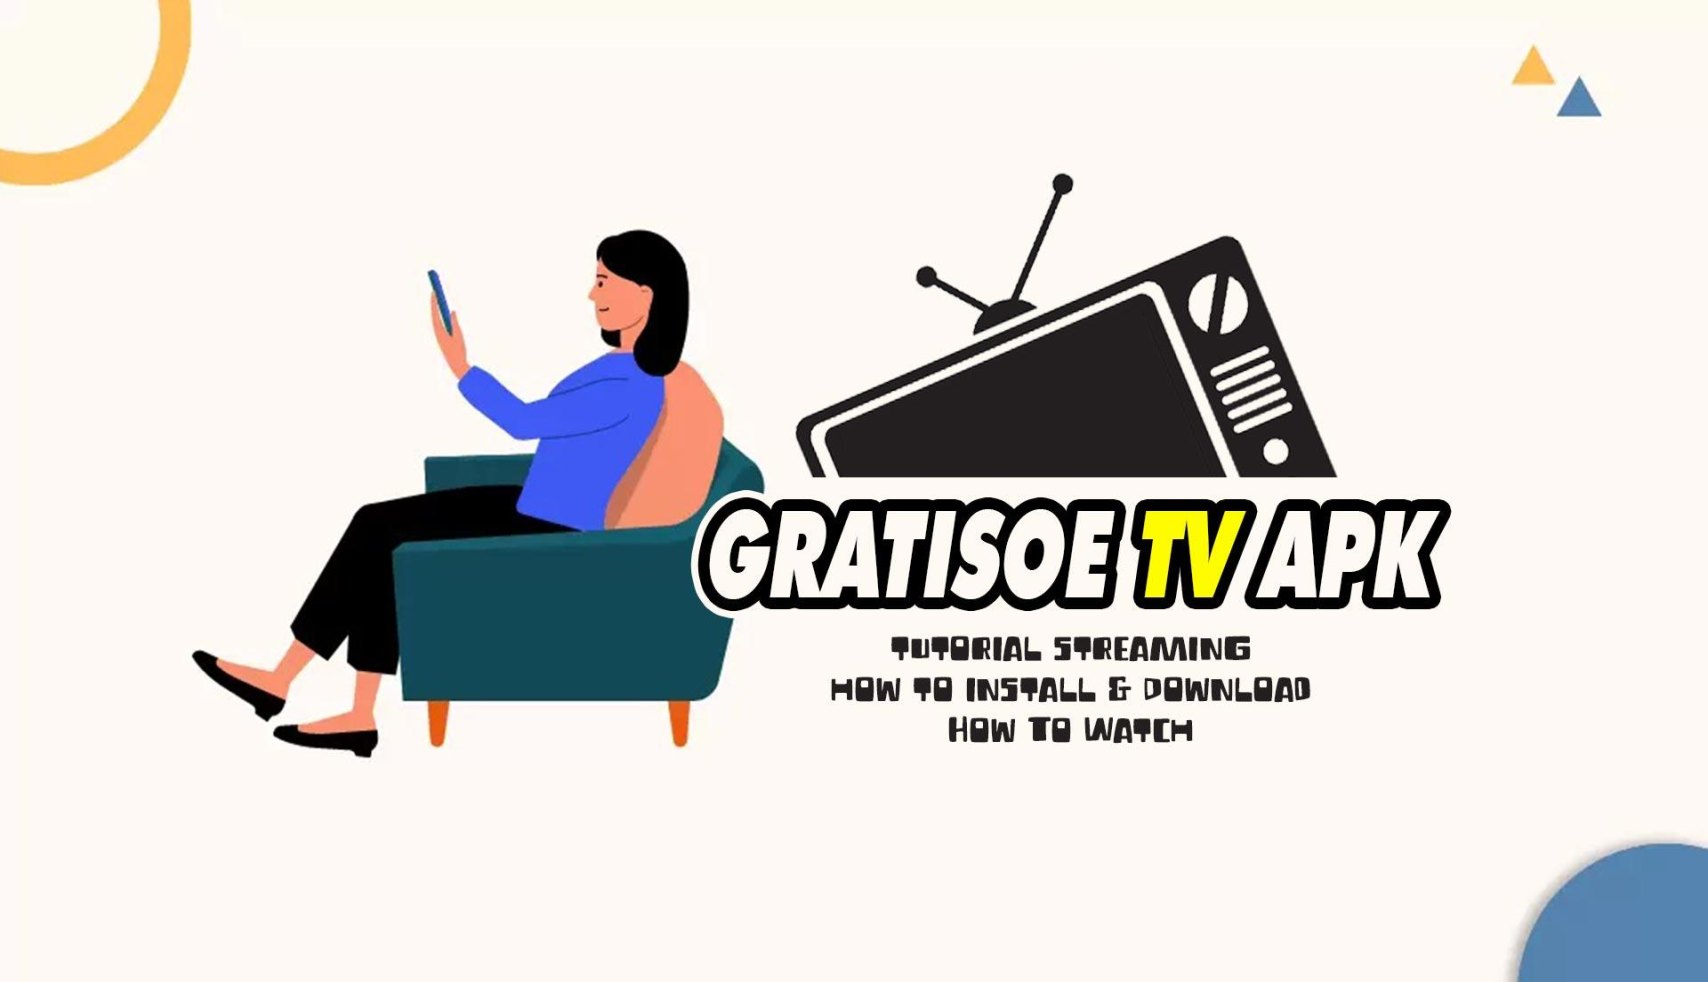 Gratisoe TV Apk Overview安卓版应用APK下载